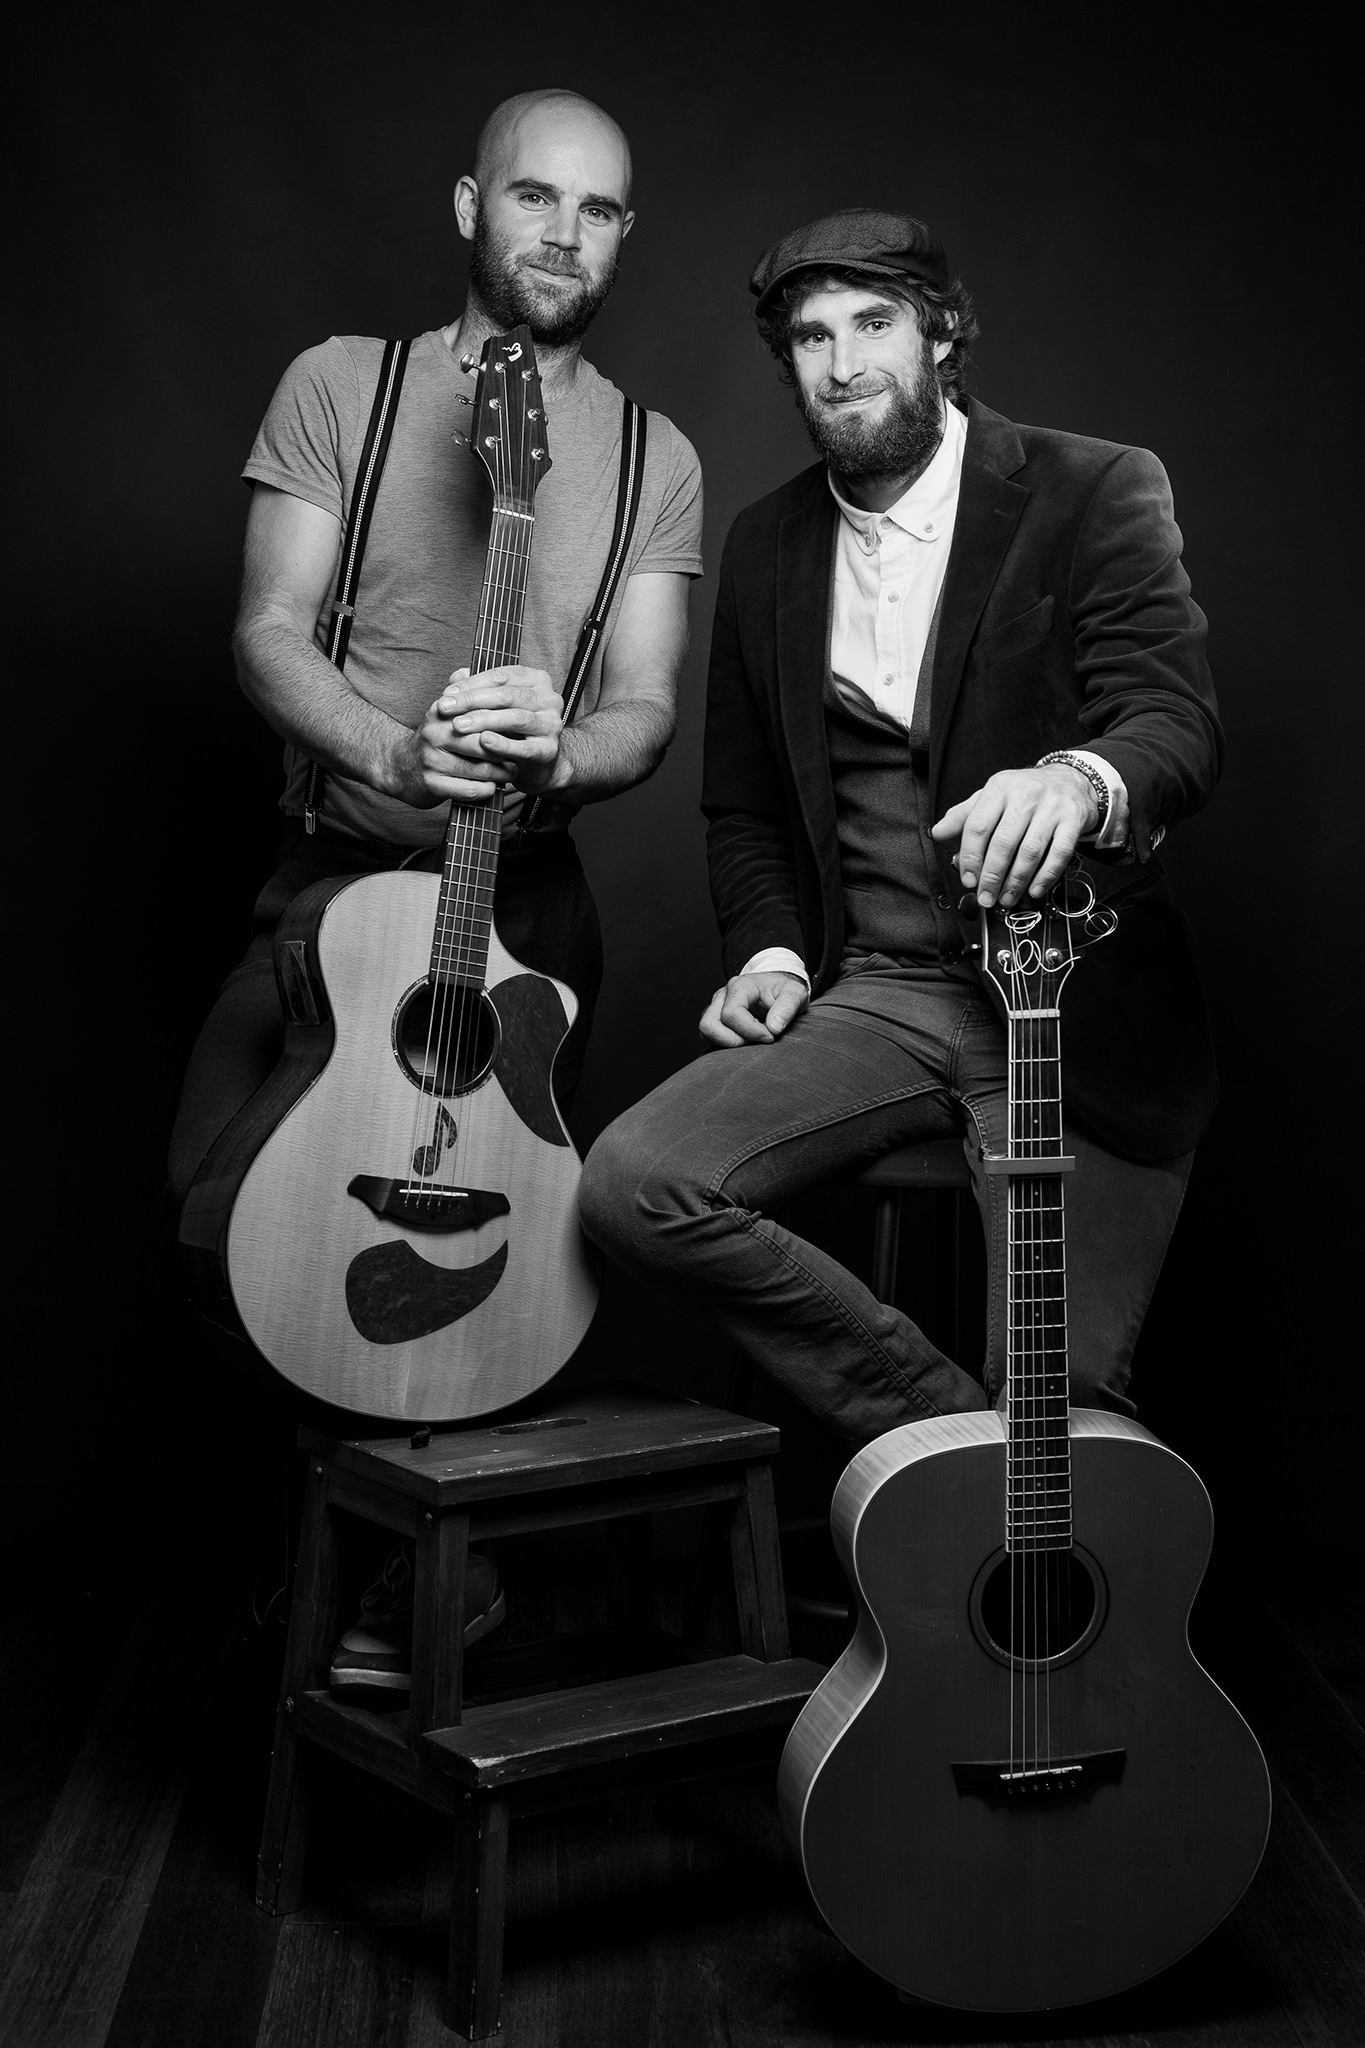  The Shady Folk - Stephen James and Brendan Guitar Maher 